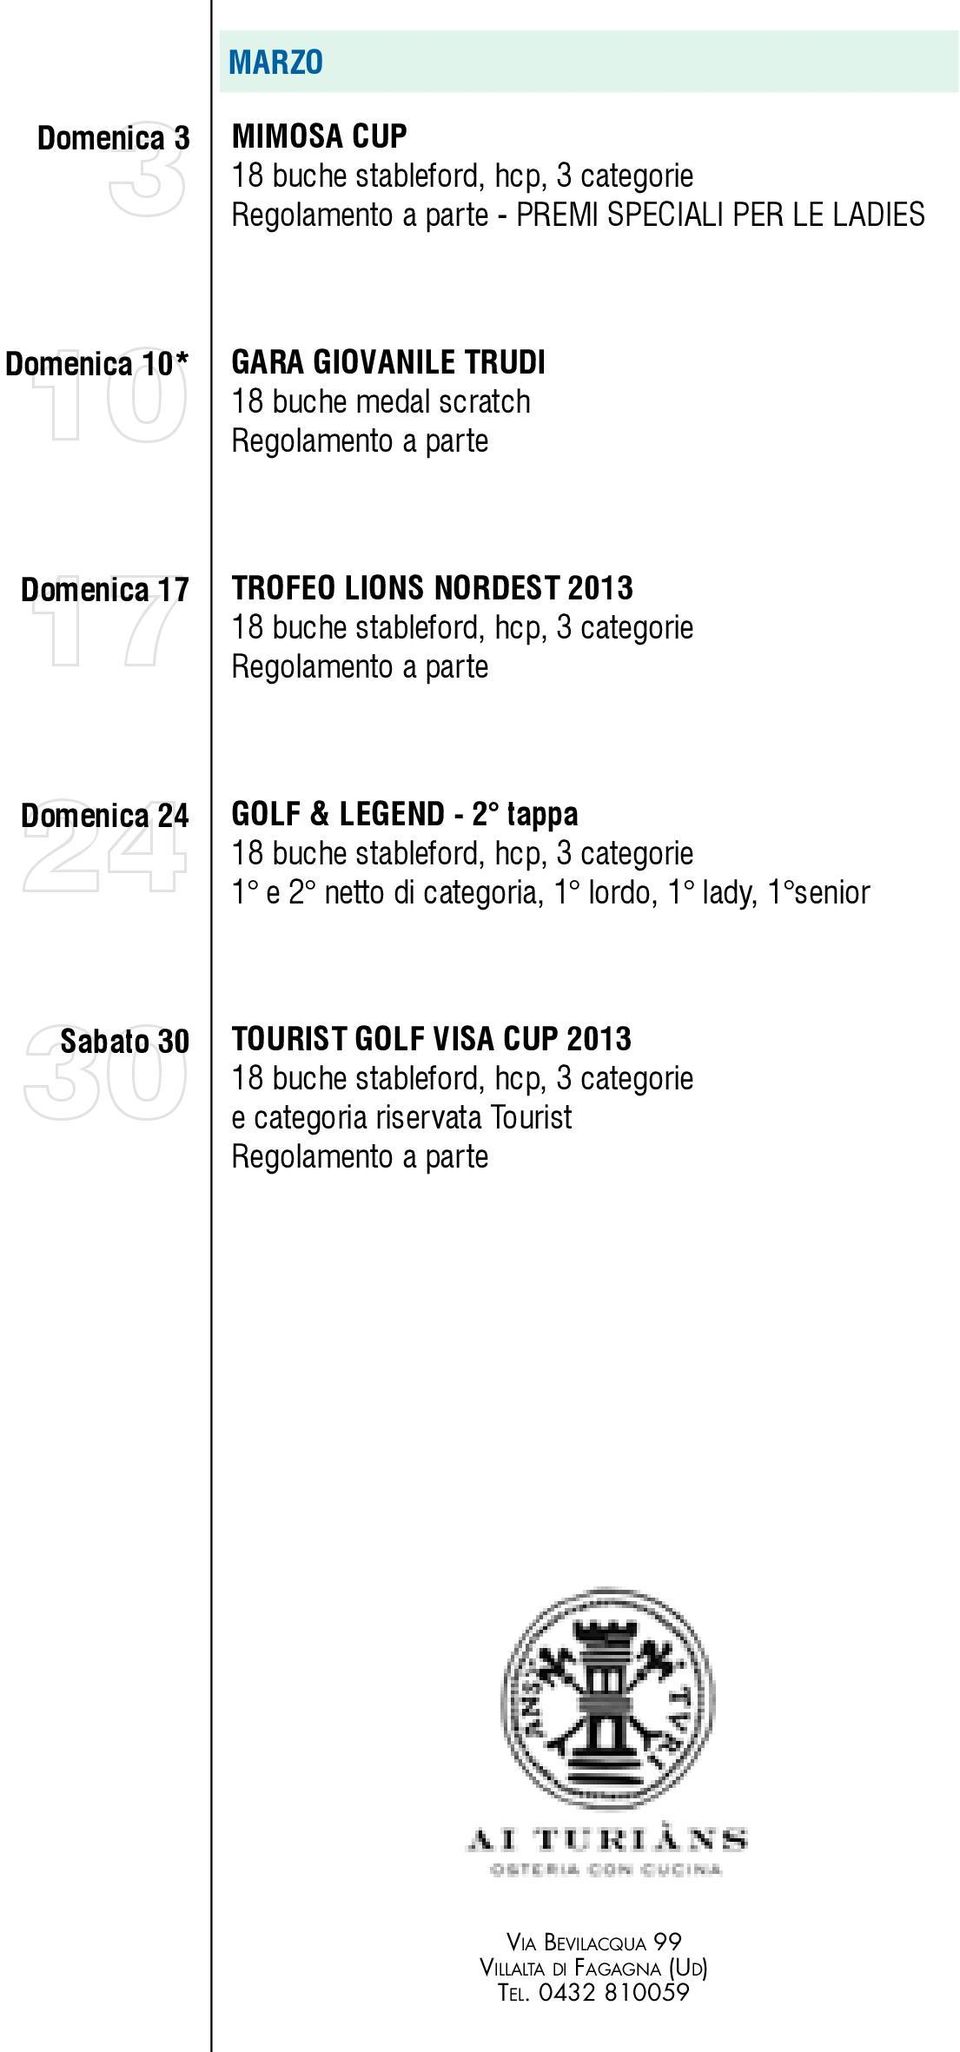 Domenica 24 GOLF & LEGEND - 2 tappa Sabato 30 TOURIST GOLF VISA CUP 2013 e